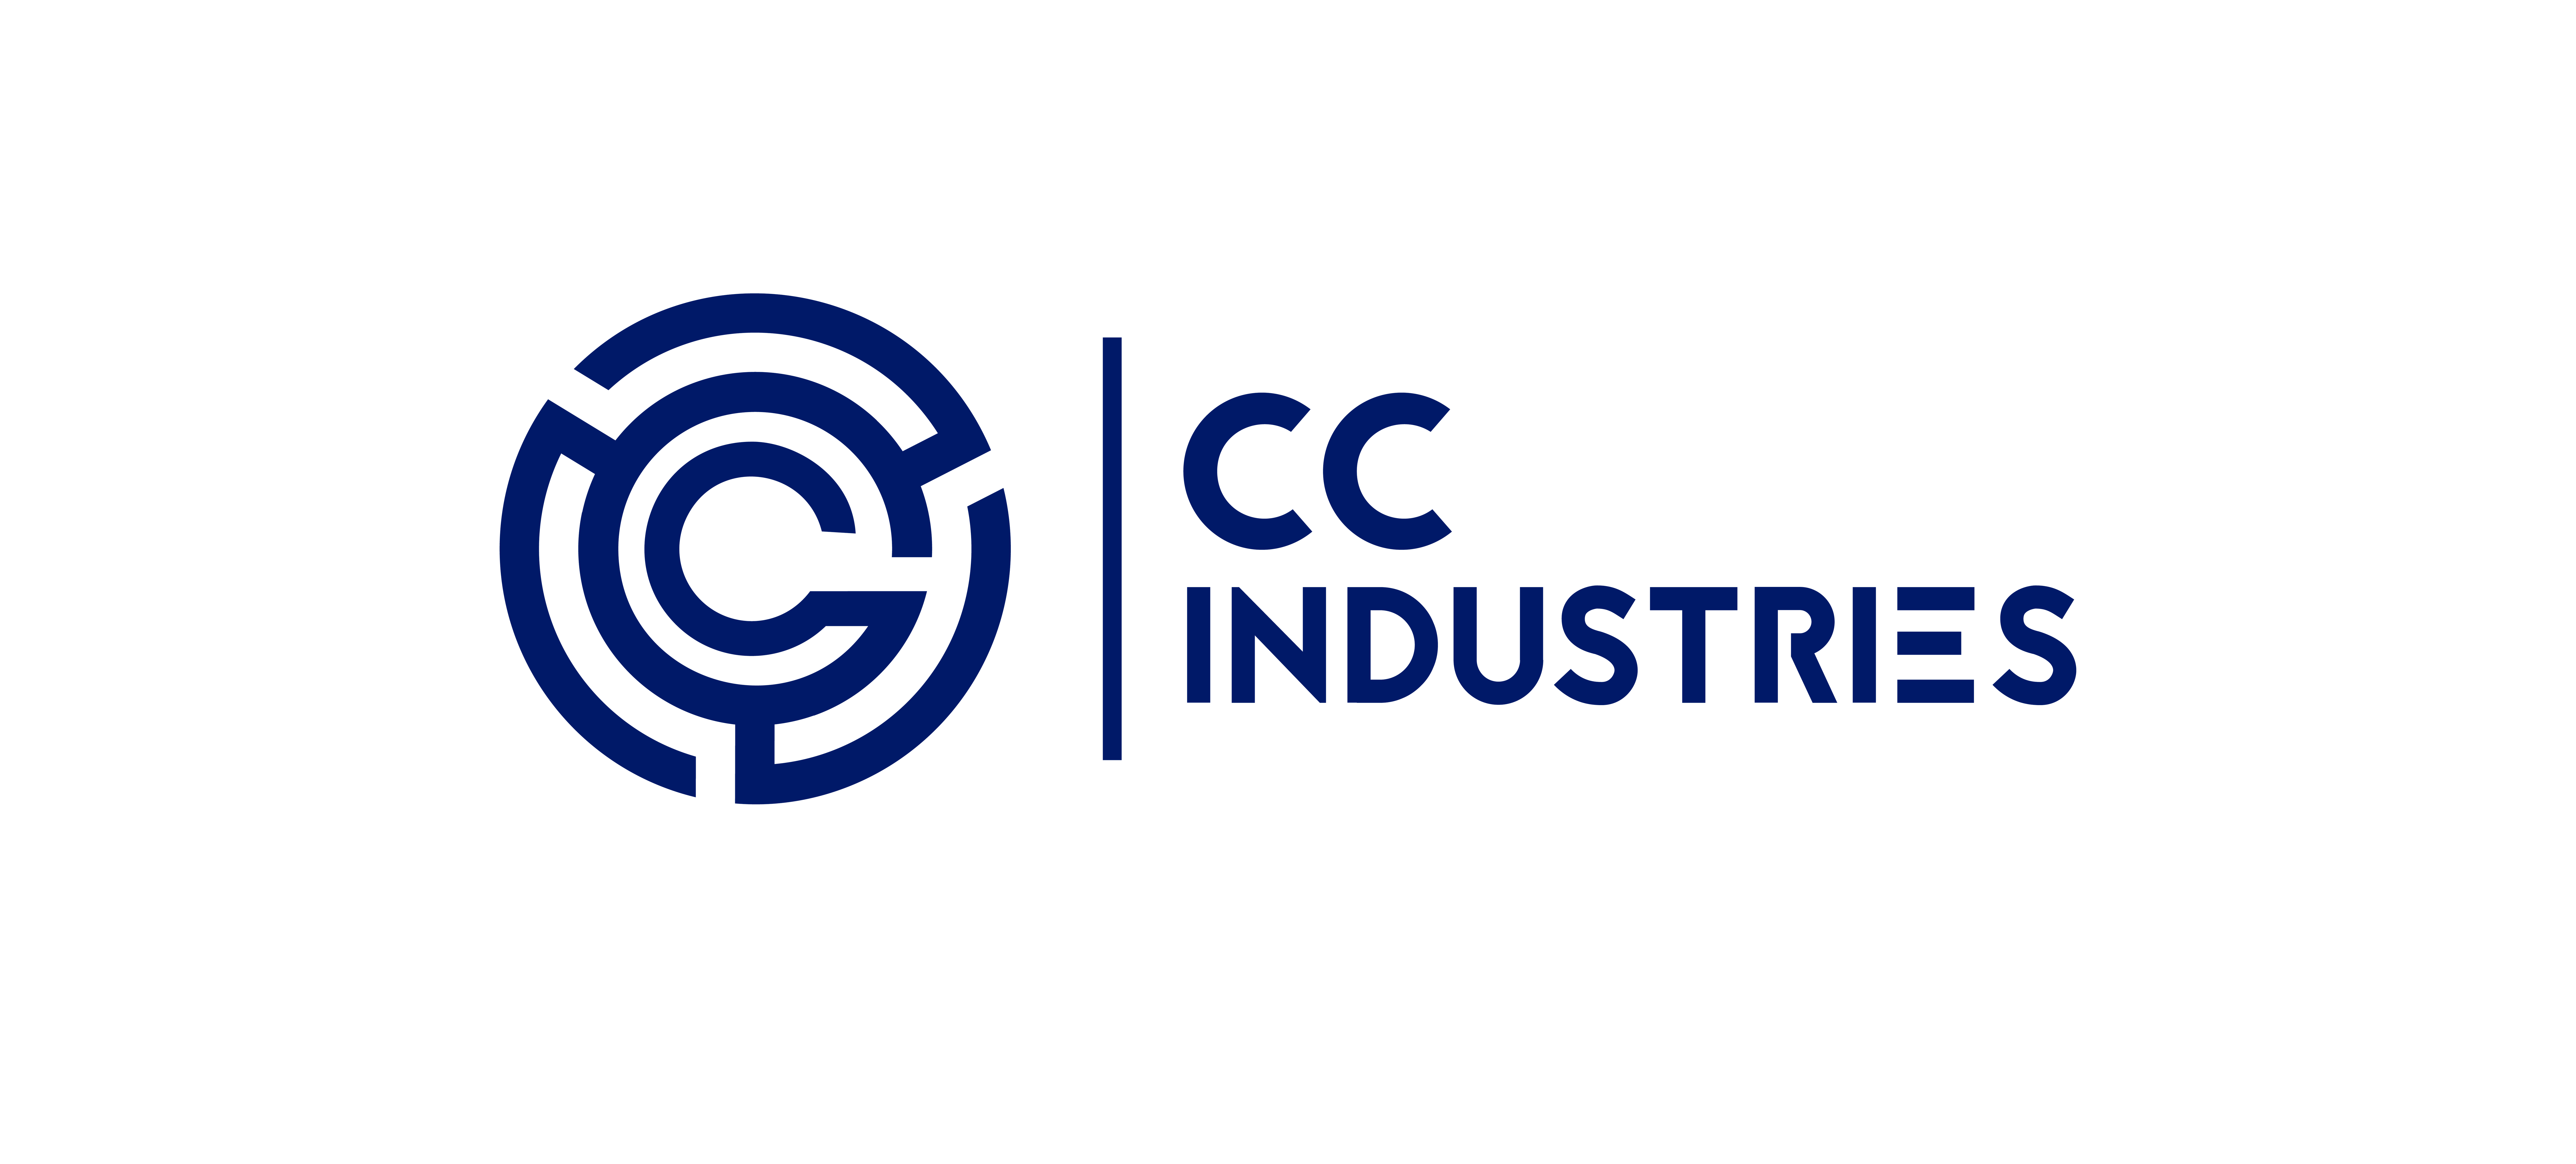 CC Industries